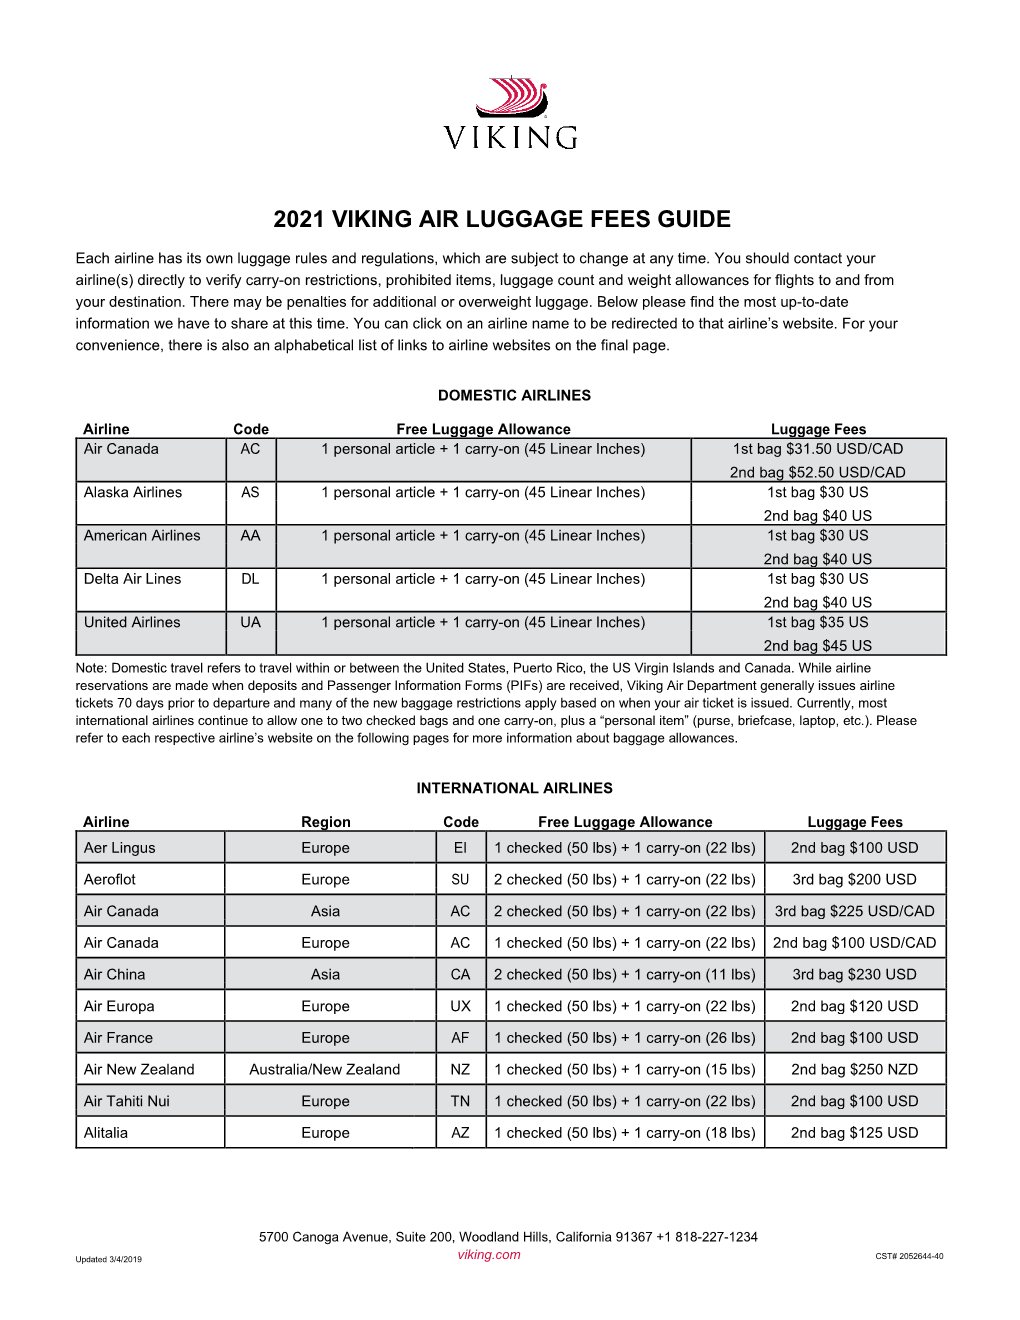 2021 Viking Air Luggage Fees Guide